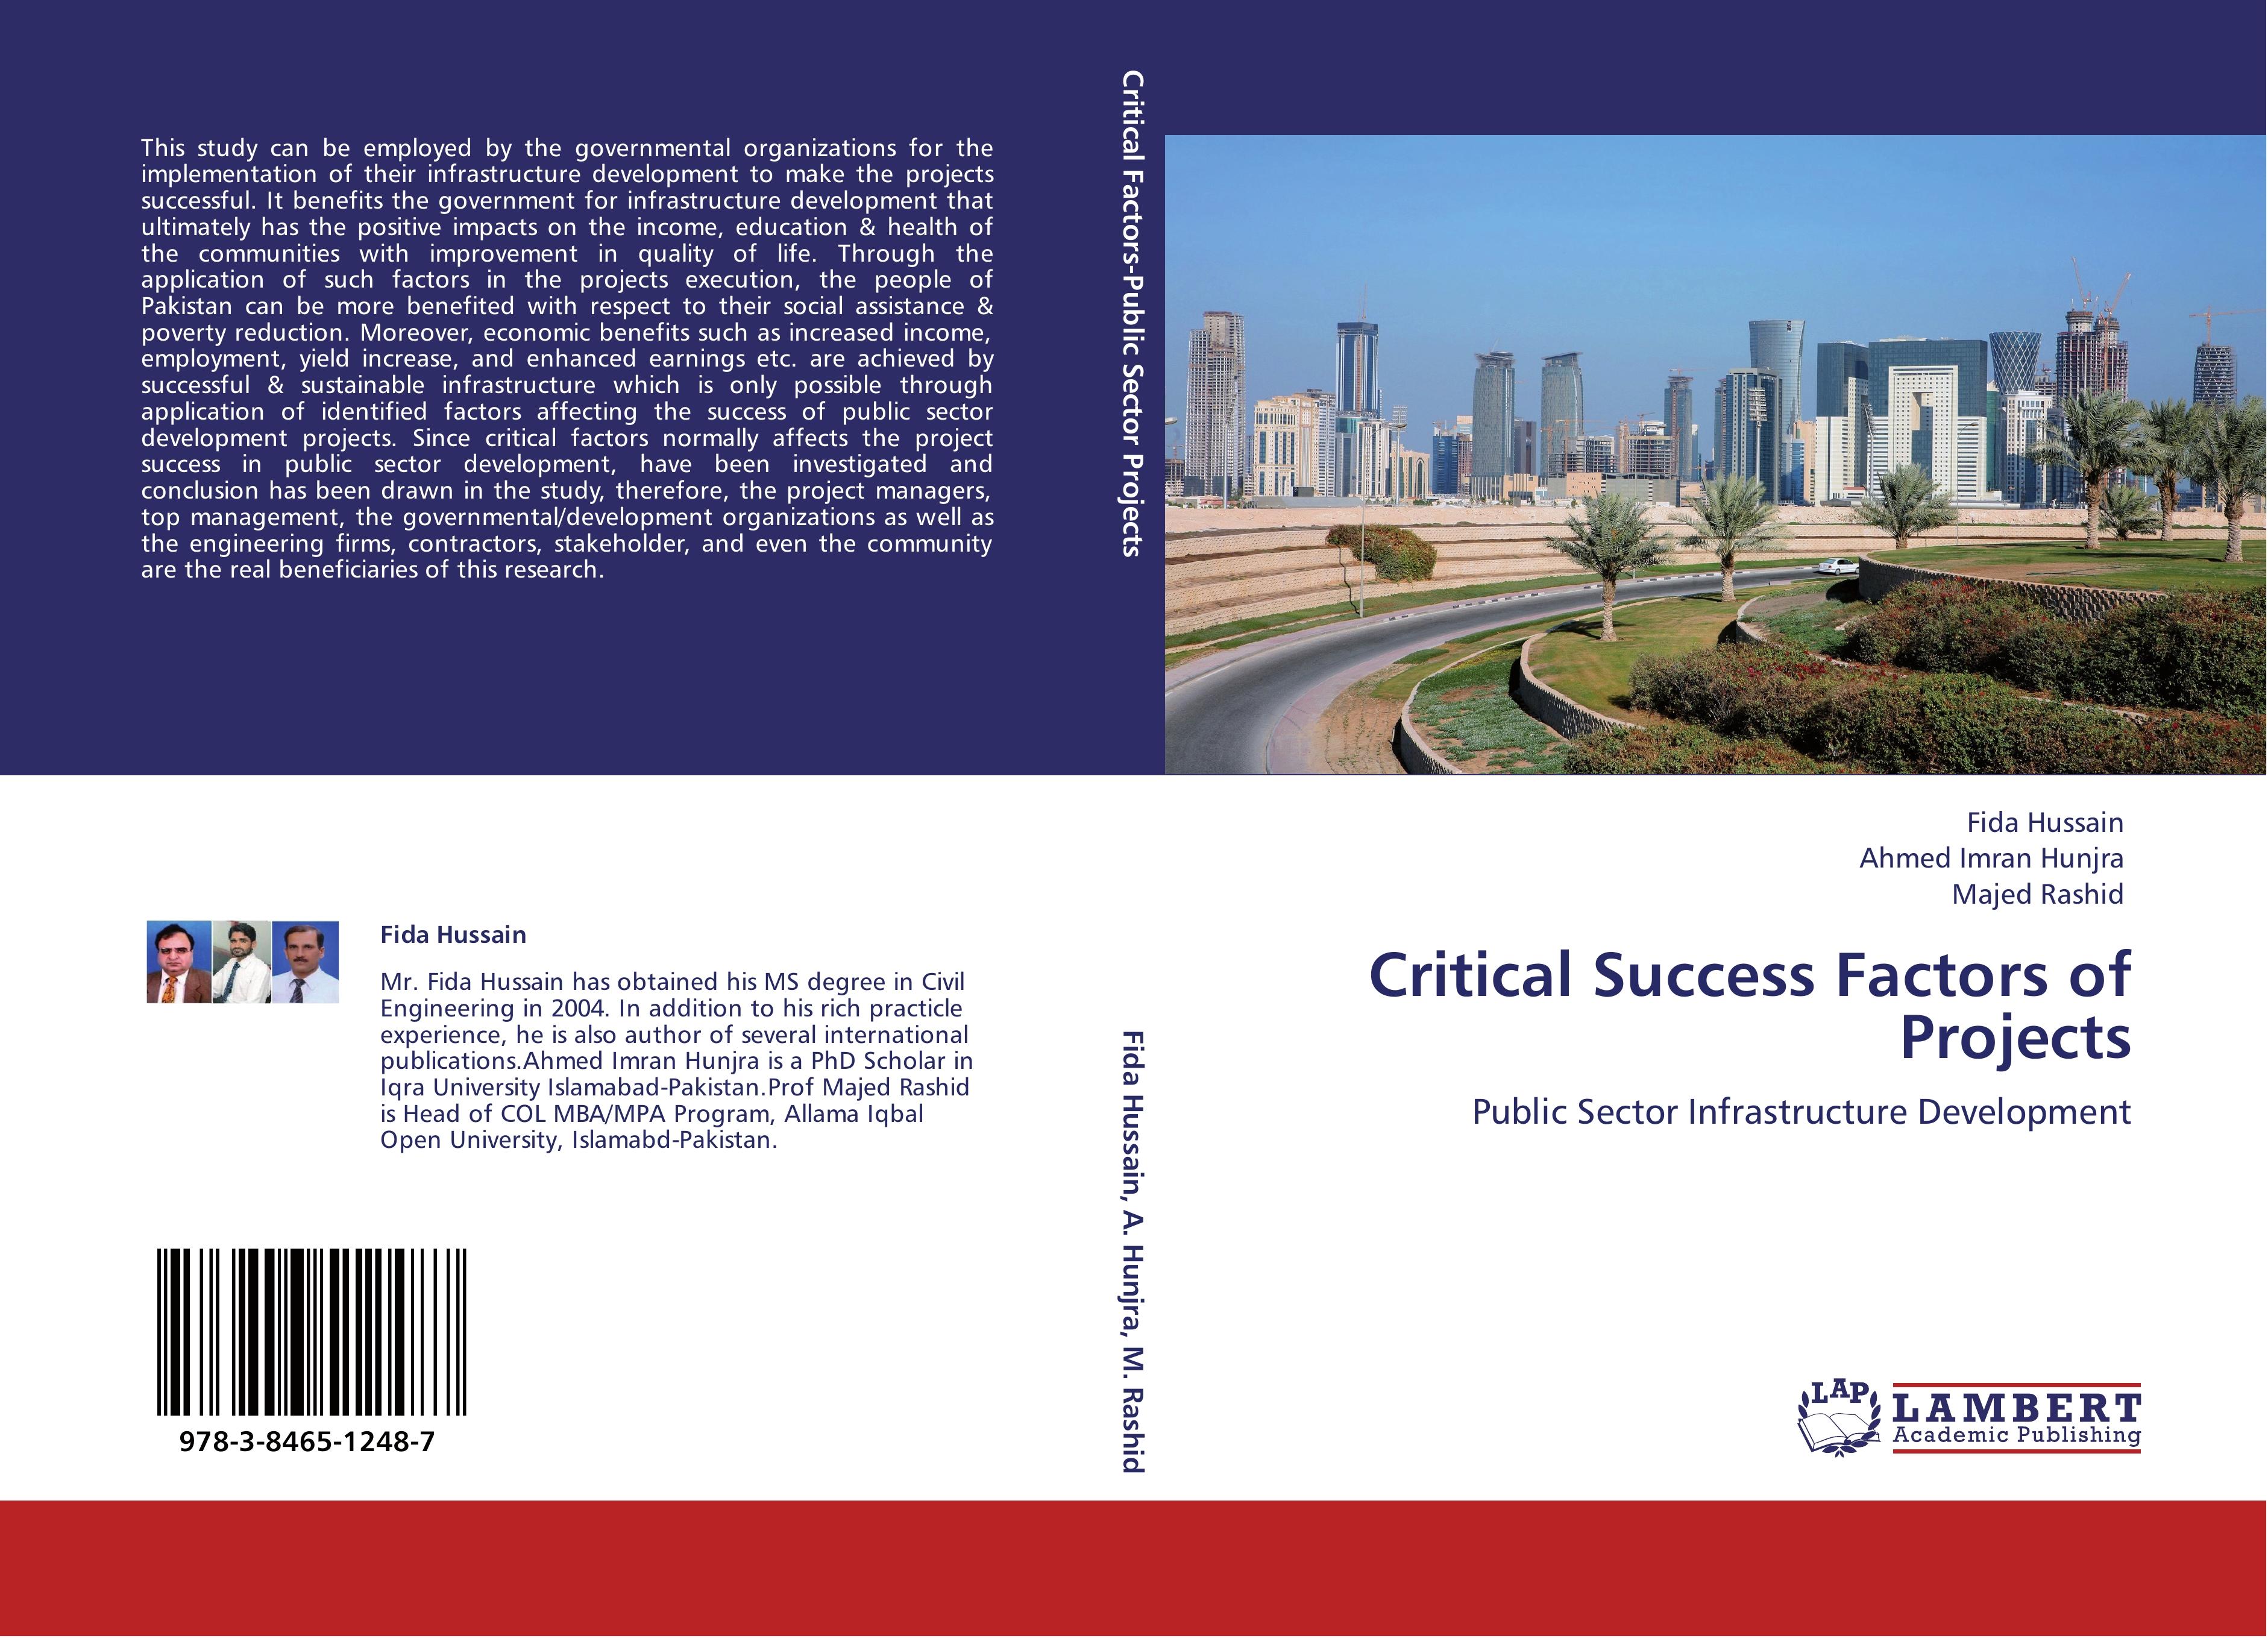 Critical Success Factors of Projects - Fida Hussain Ahmed Imran Hunjra Majed Rashid